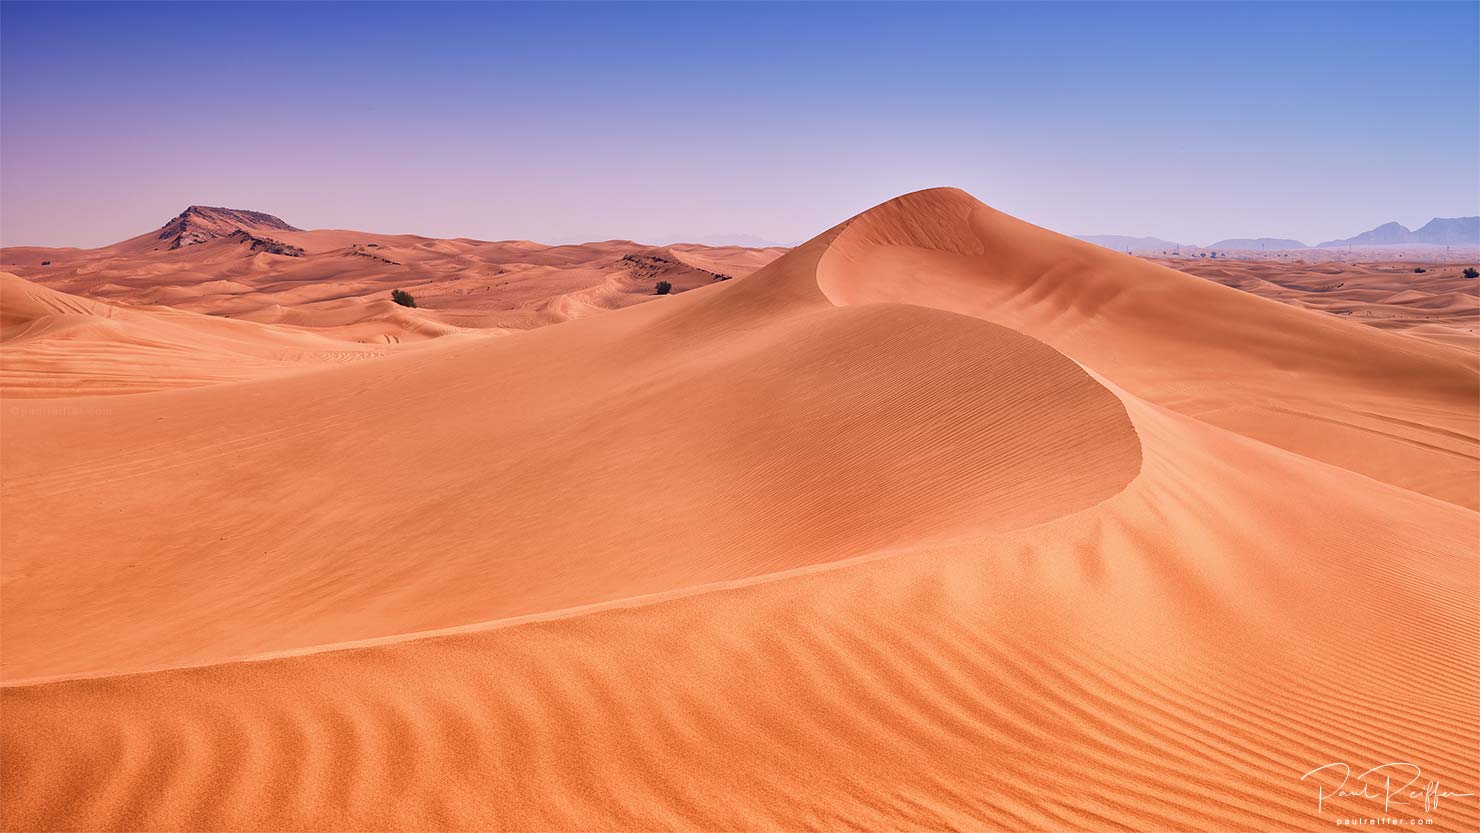 Scorched Earth Dubai Sand Dune Red Desert UAE Emirates Heat Empty 4x4 Bashing Experience Paul Reiffer Photographer